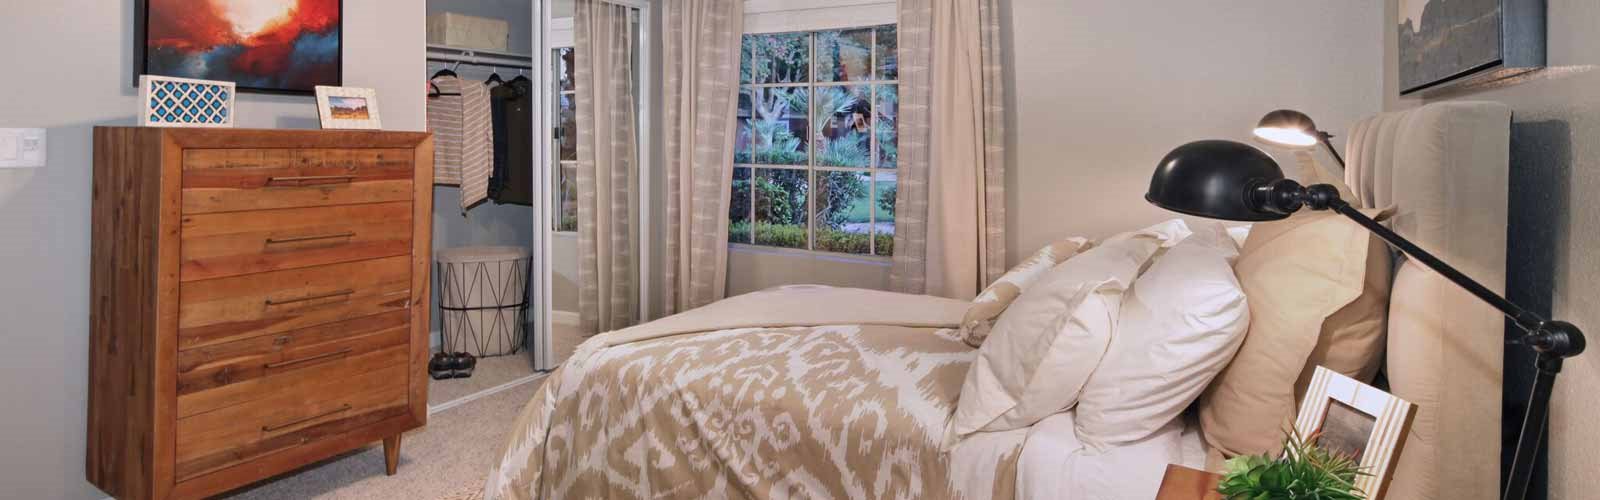 Comfortable Bedroom at Mirabella Apartments, Bermuda Dunes, CA